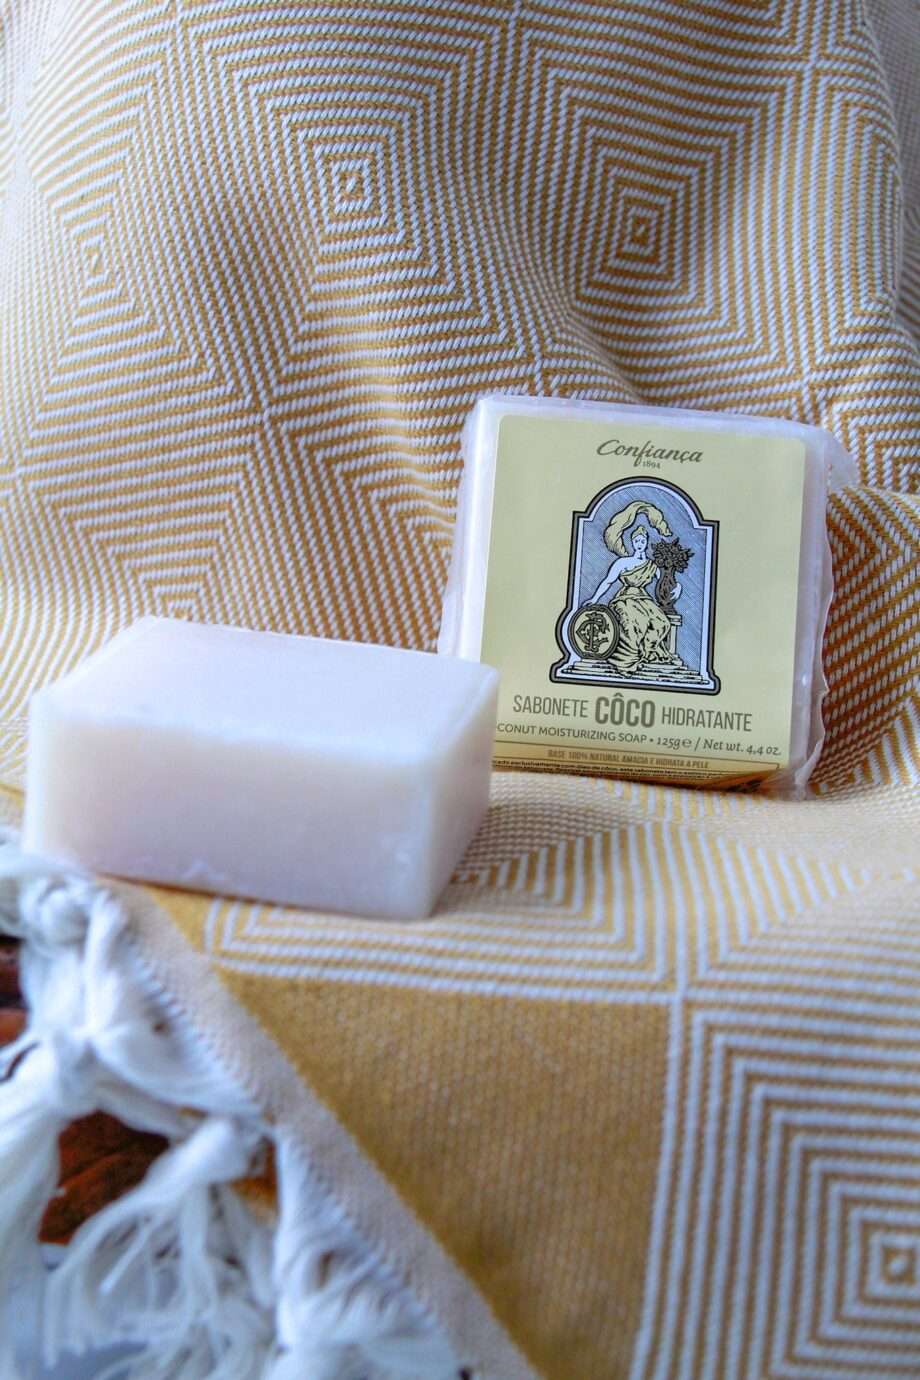 Styling spa soap Coco moisturizing